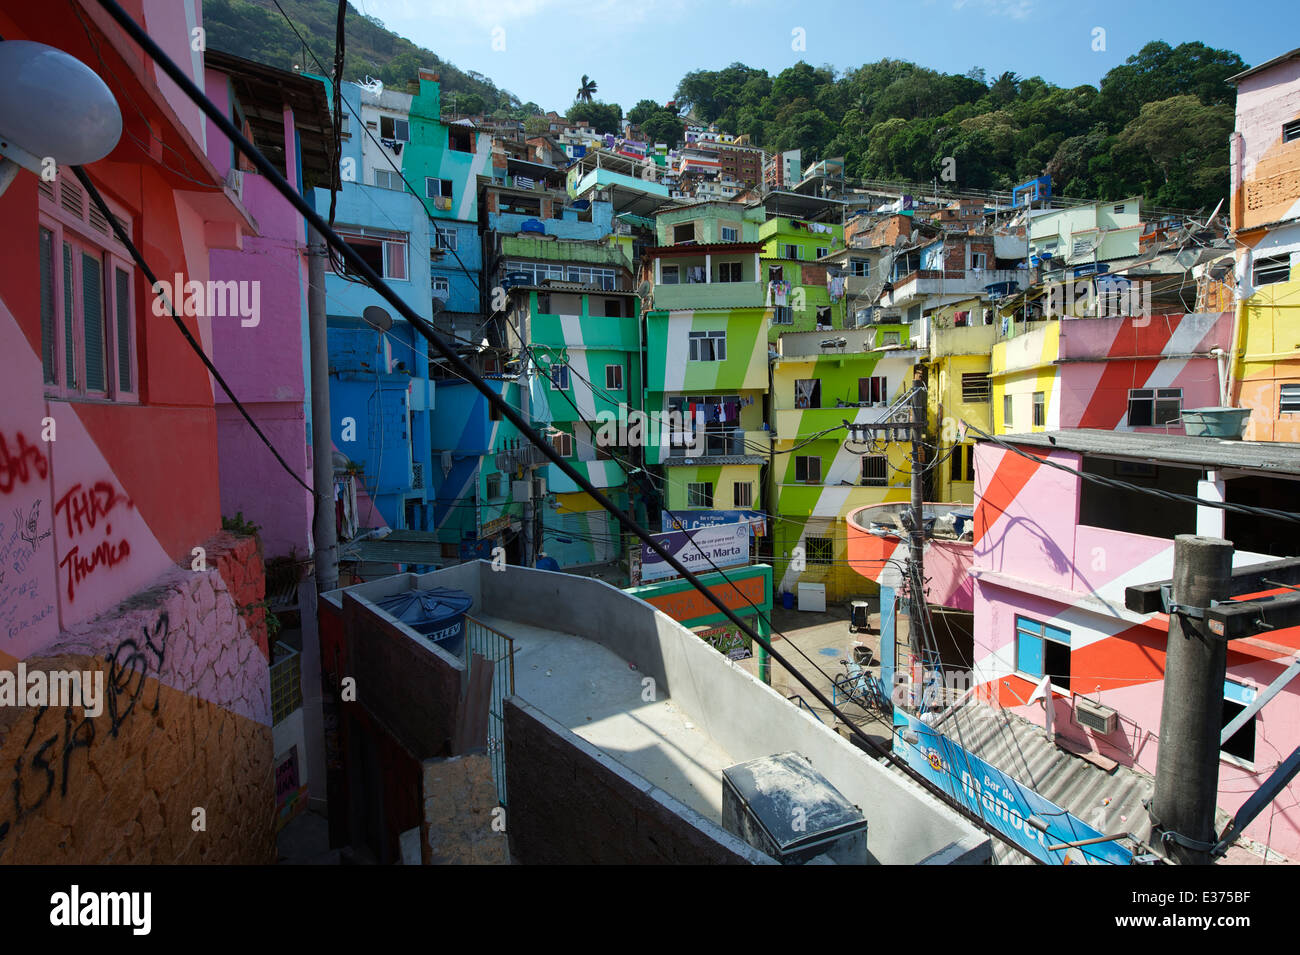 RIO DE JANEIRO, Brasilien - 14. Februar 2014: Graffiti schmückt die bunten Gebäude in der Favela Santa Marta gemalt. Stockfoto